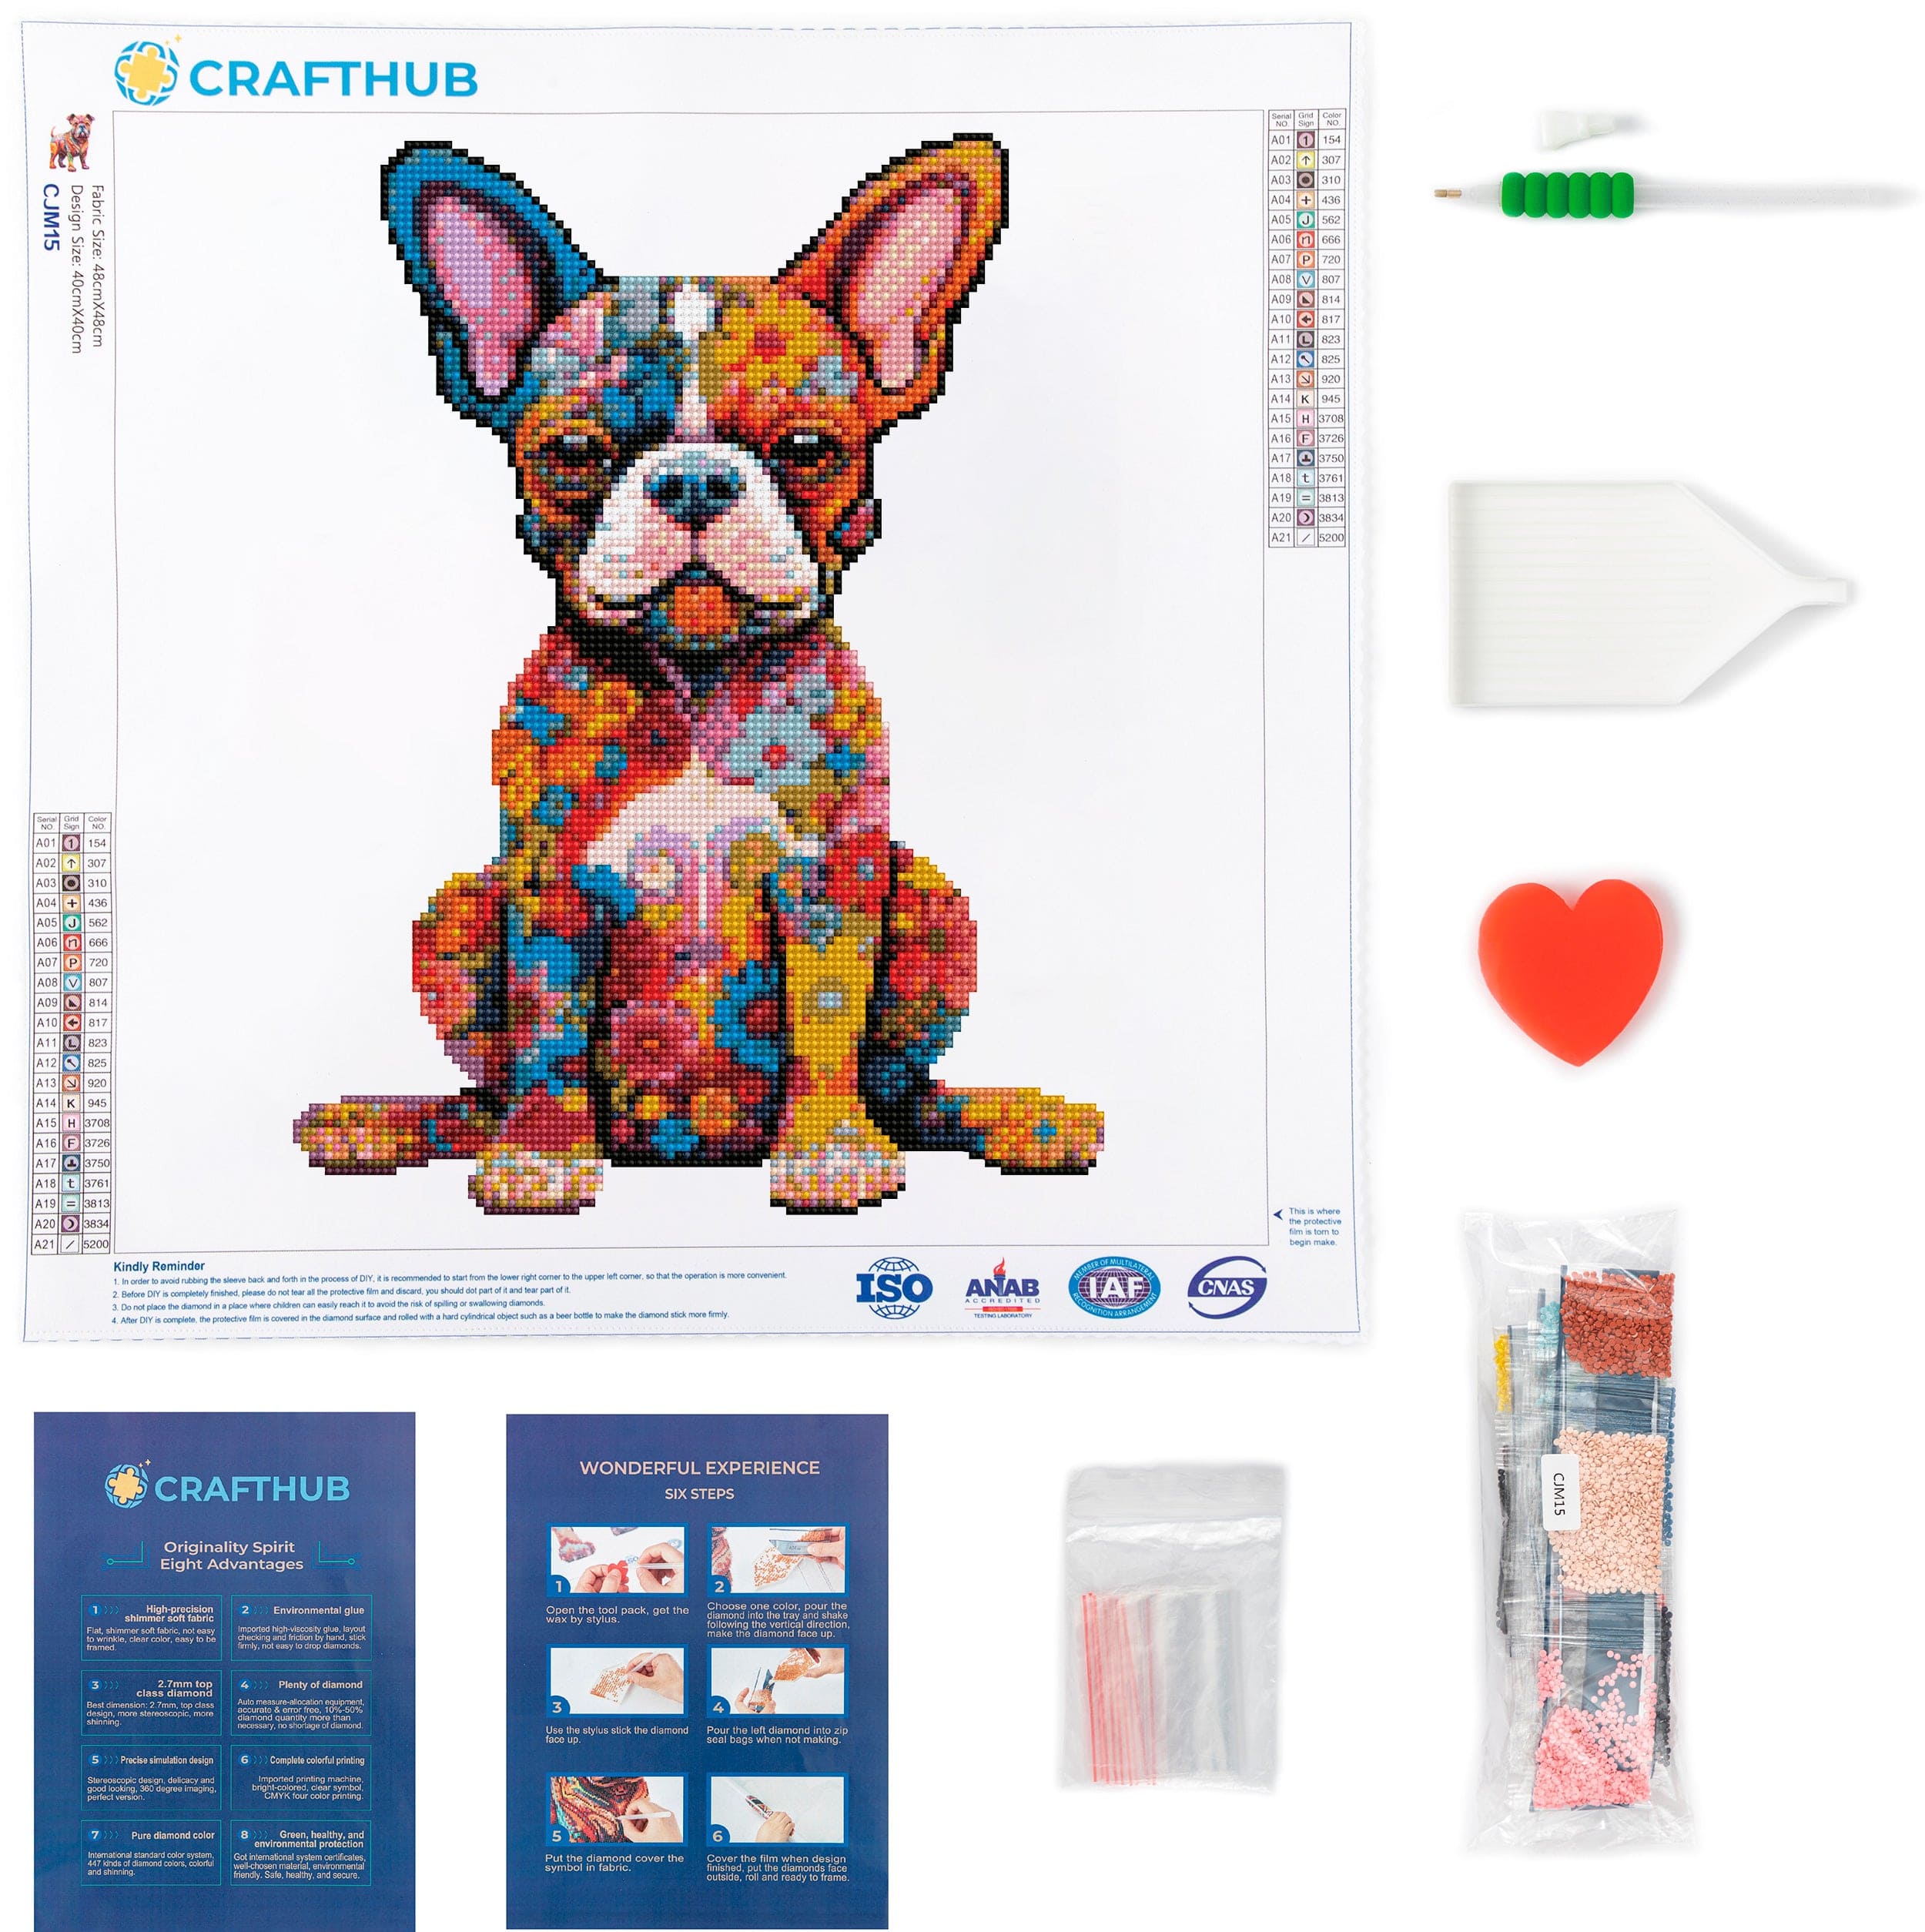 15.7"x15.7" / 40cm x 40cm Boston Terrier Dog - Diamond Painting Kit